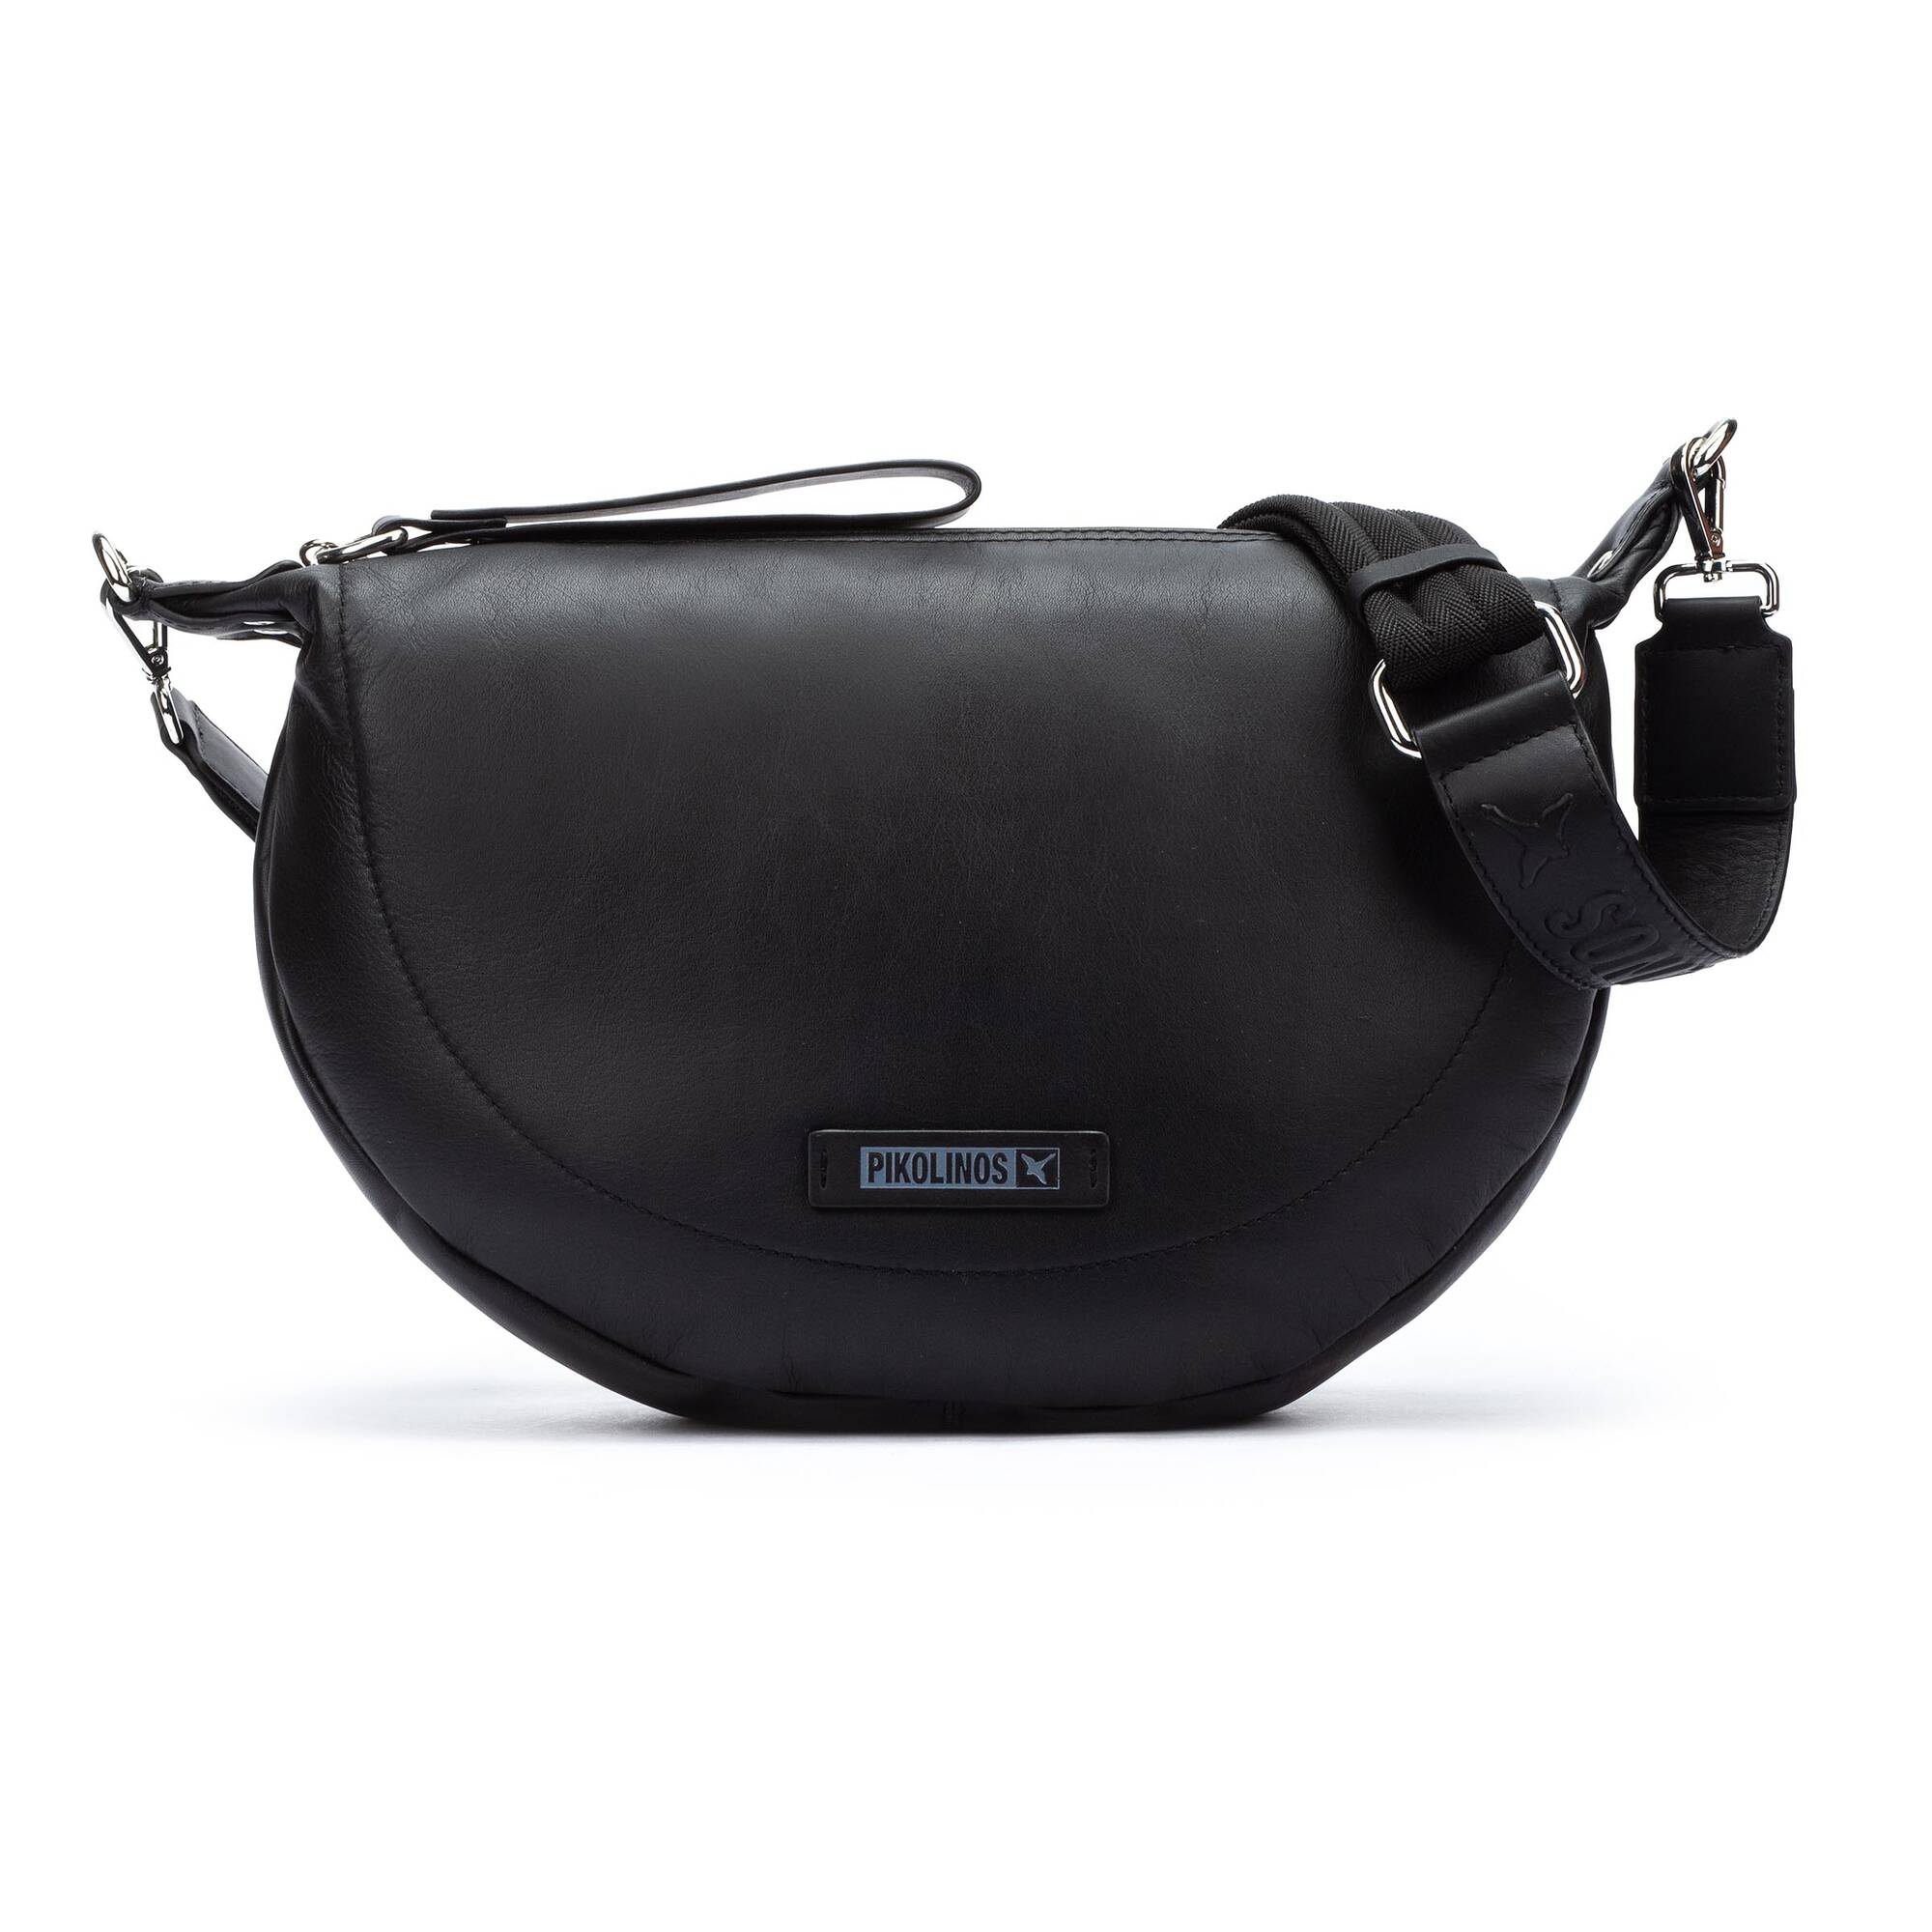 Pikolinos Alcudia Leather Bag Color: Black